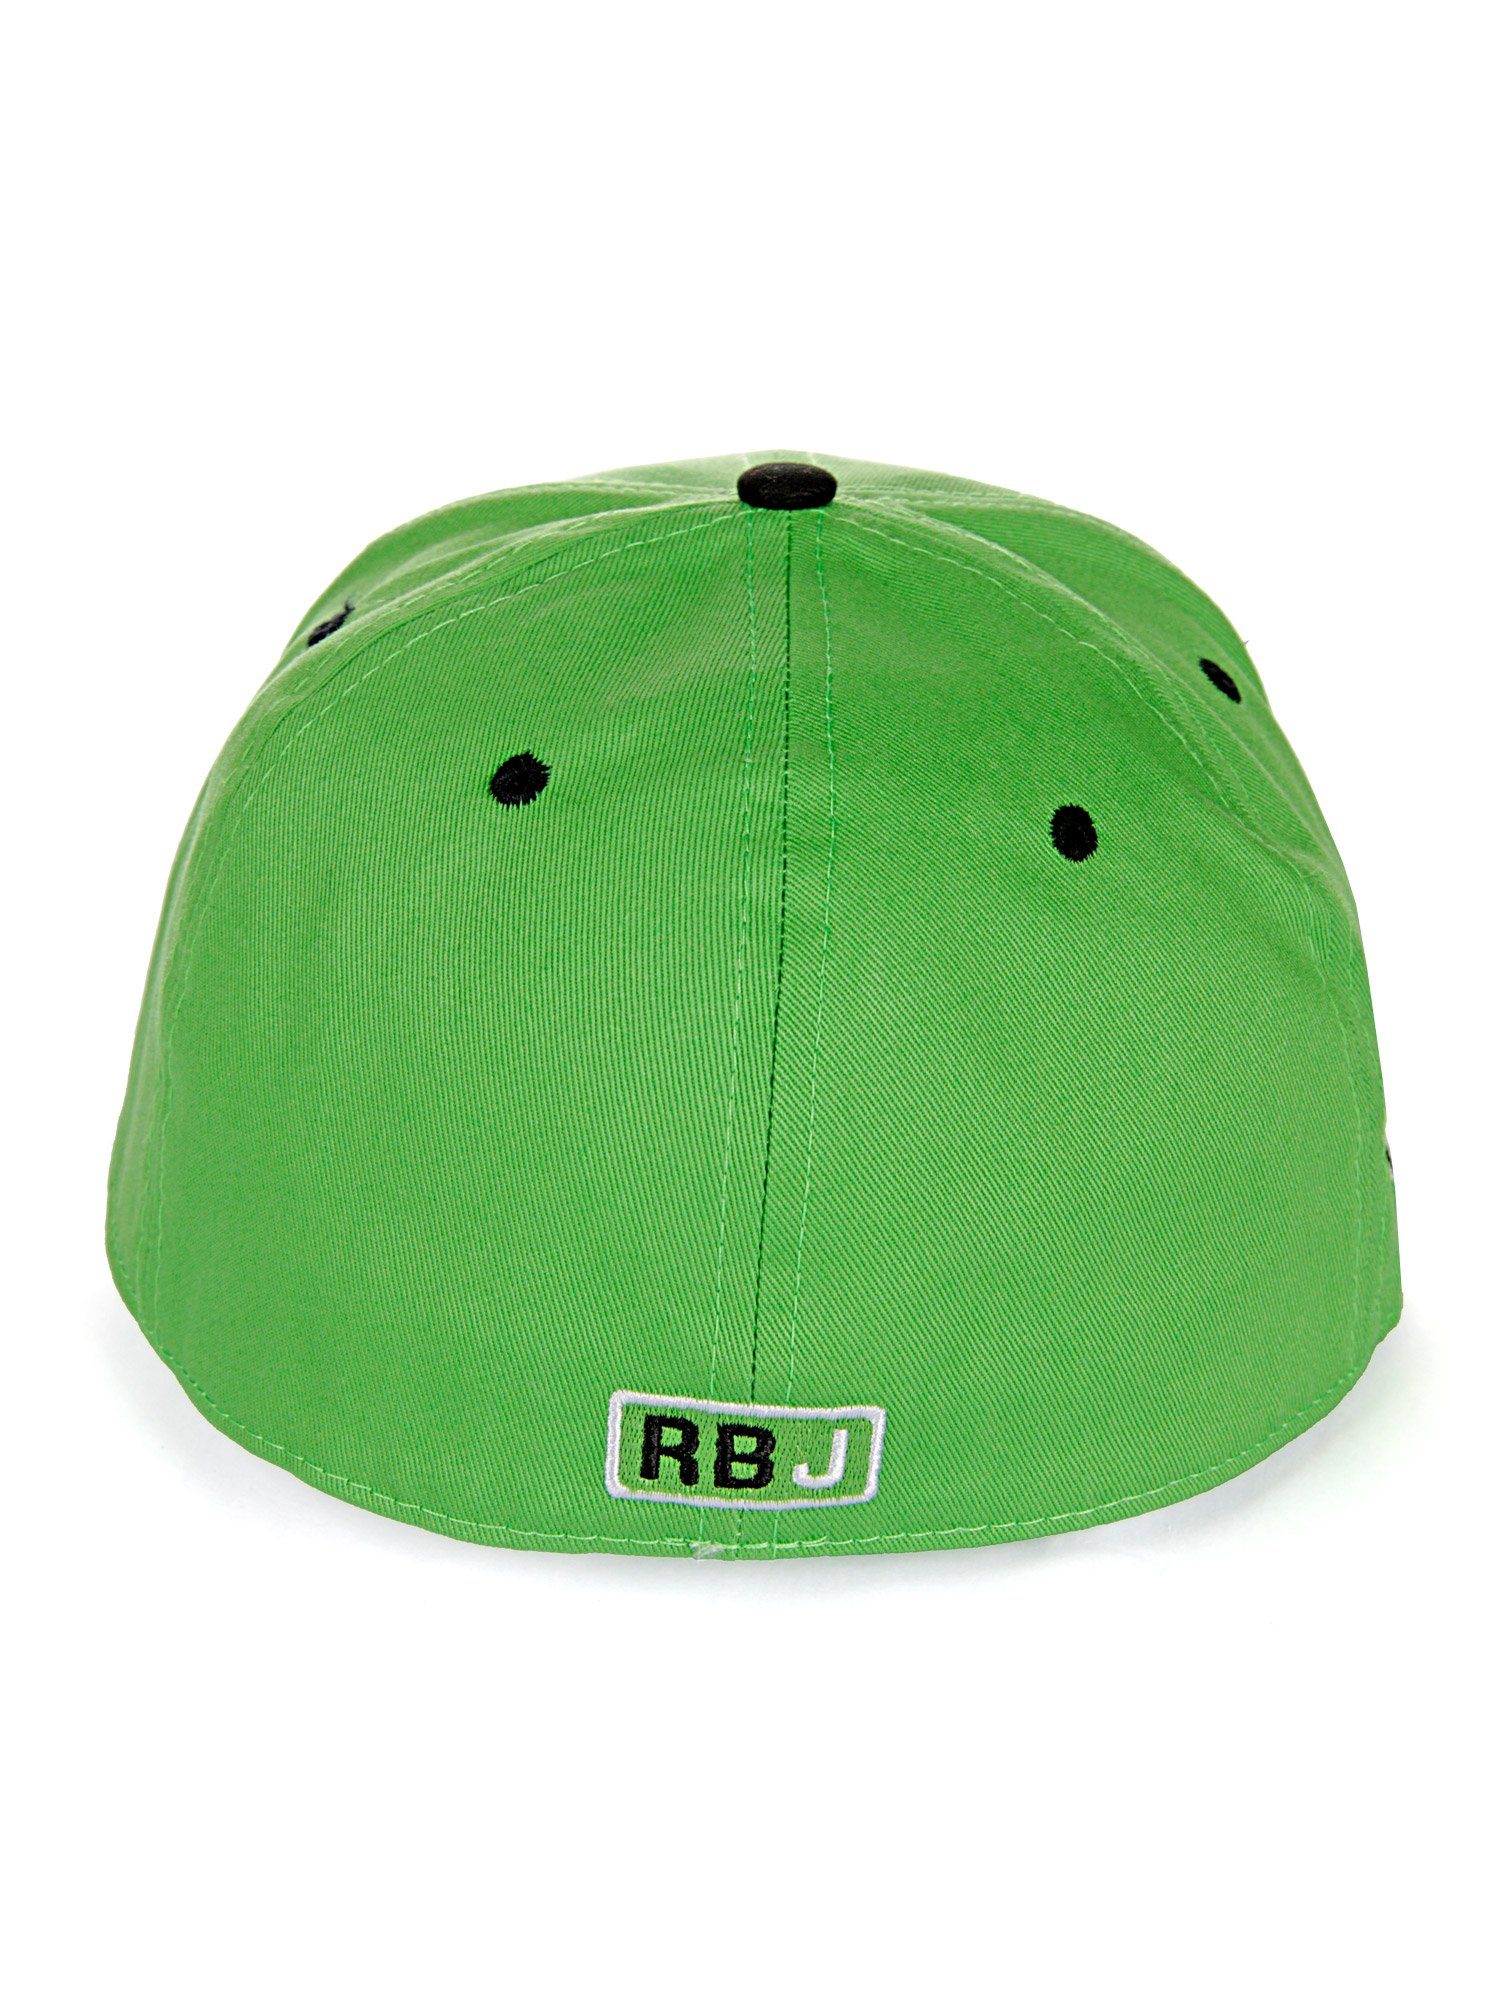 RedBridge Baseball Cap Durham mit kontrastfarbigem grün-schwarz Schirm